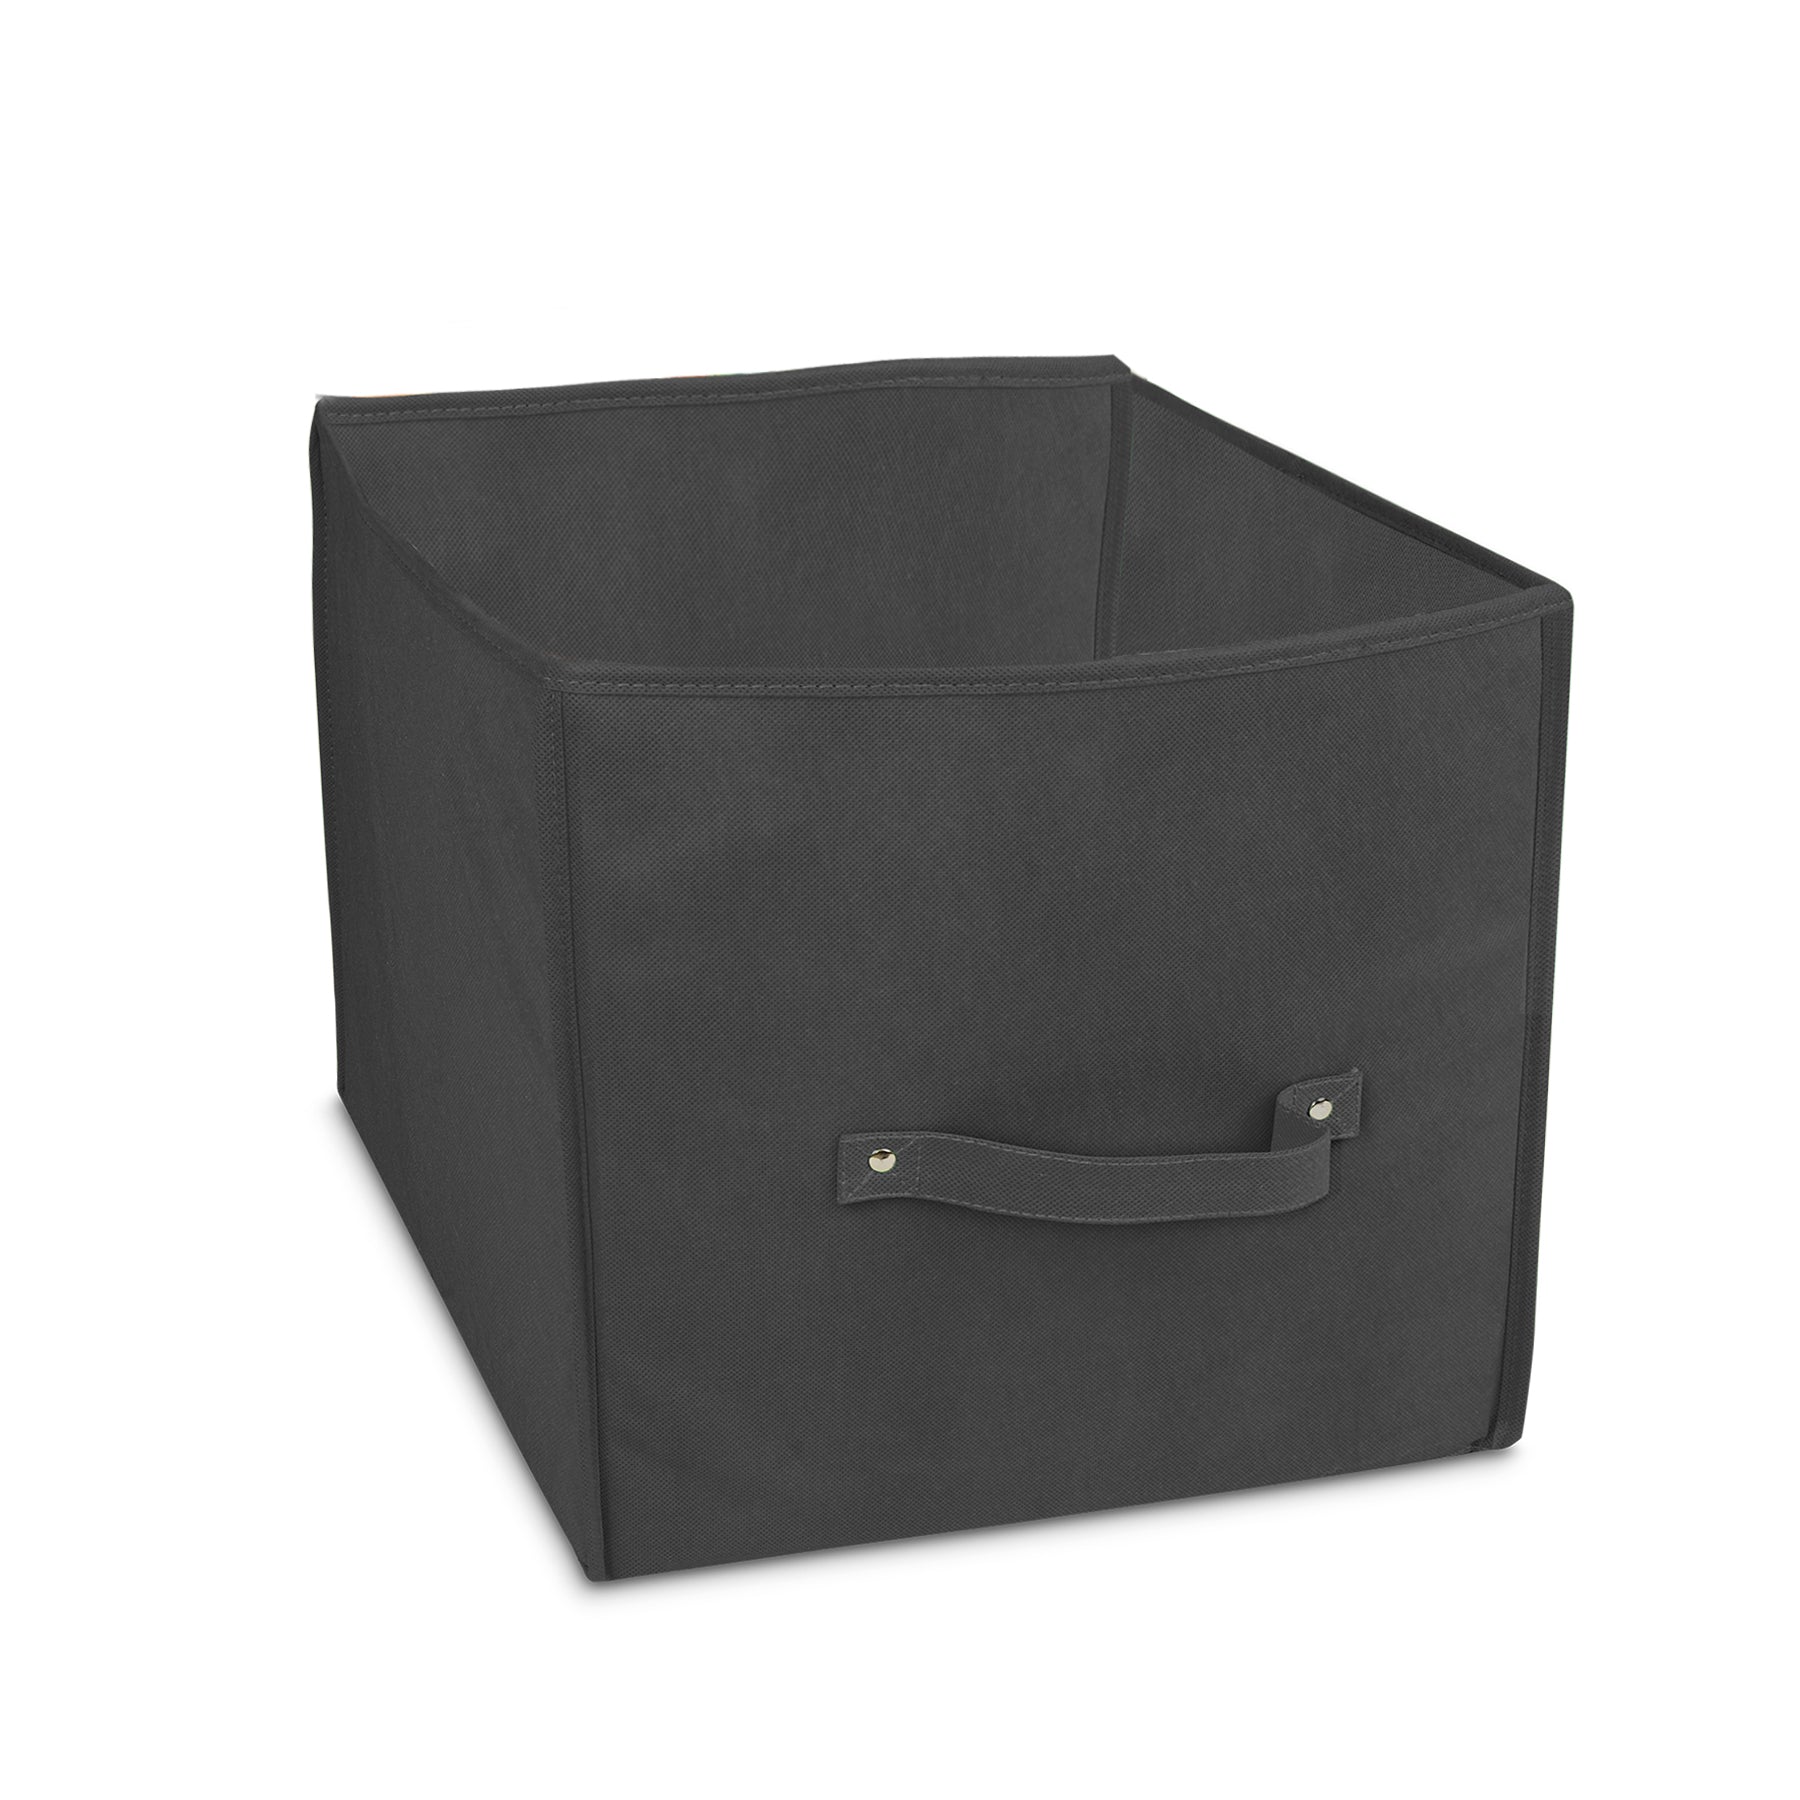 Storage Cube with Handle - 11 x 11 x 11 Inch - Black - Smart Design® 1